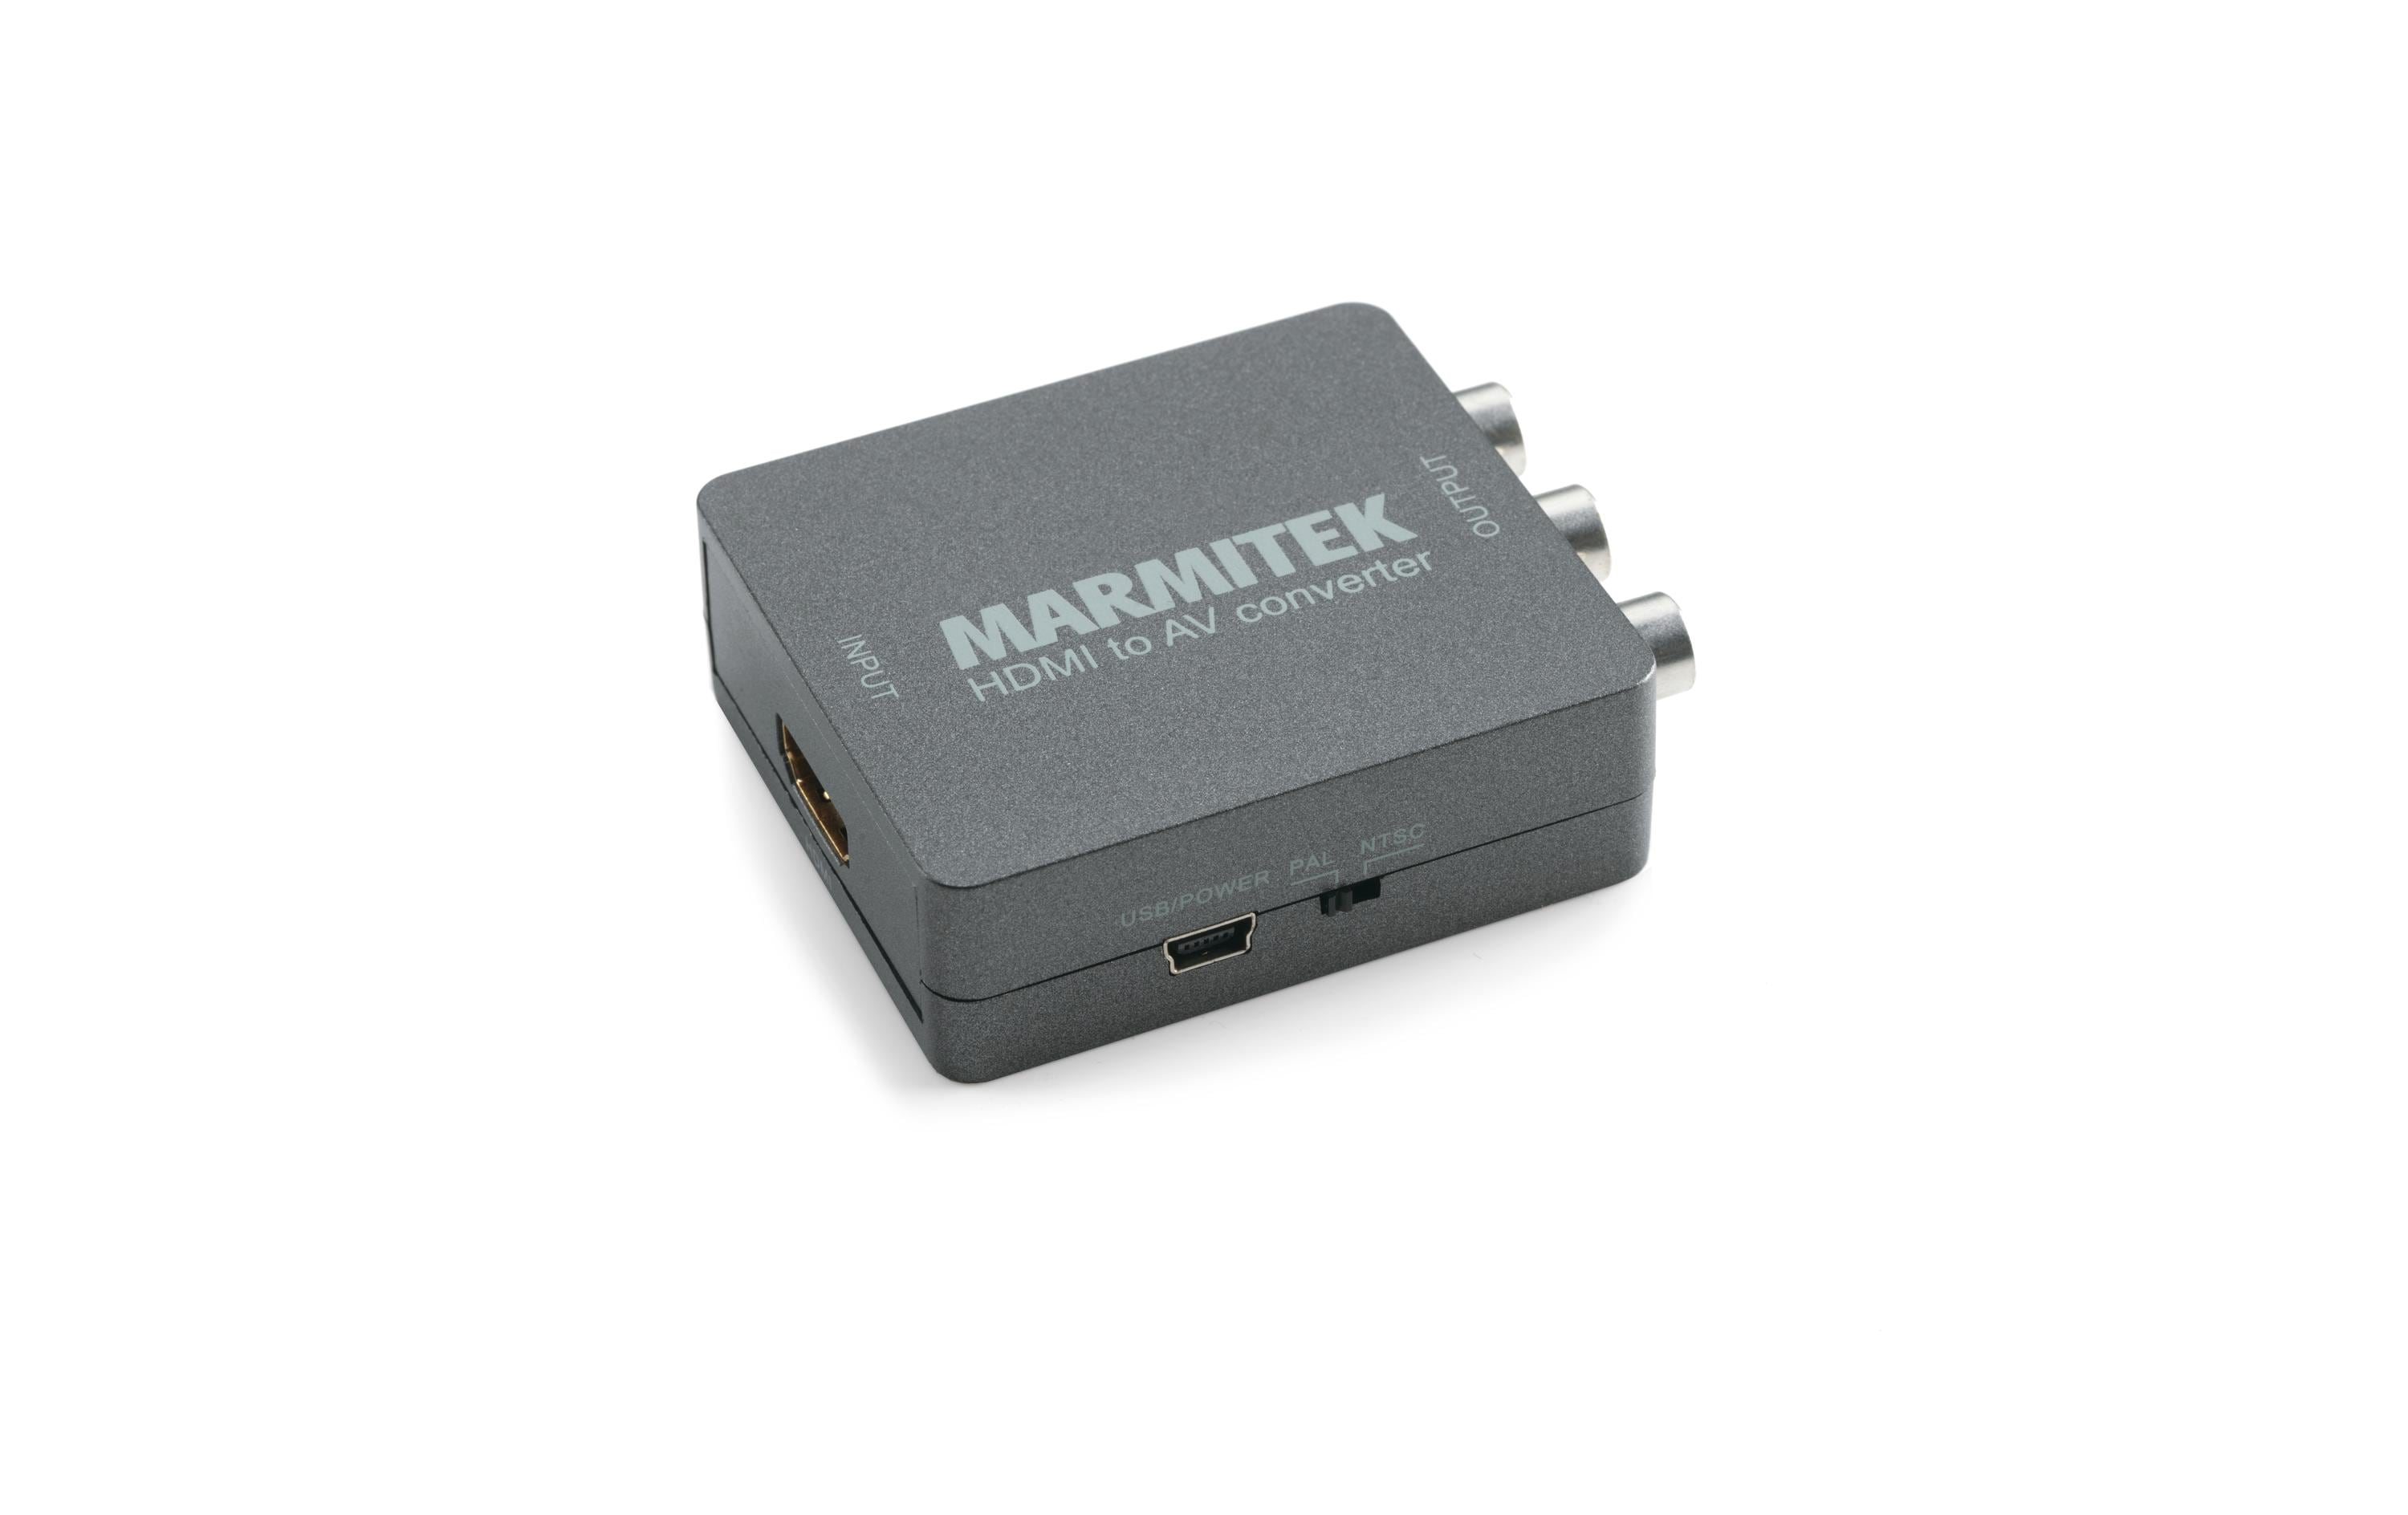 Marmitek Konverter Connect HA13